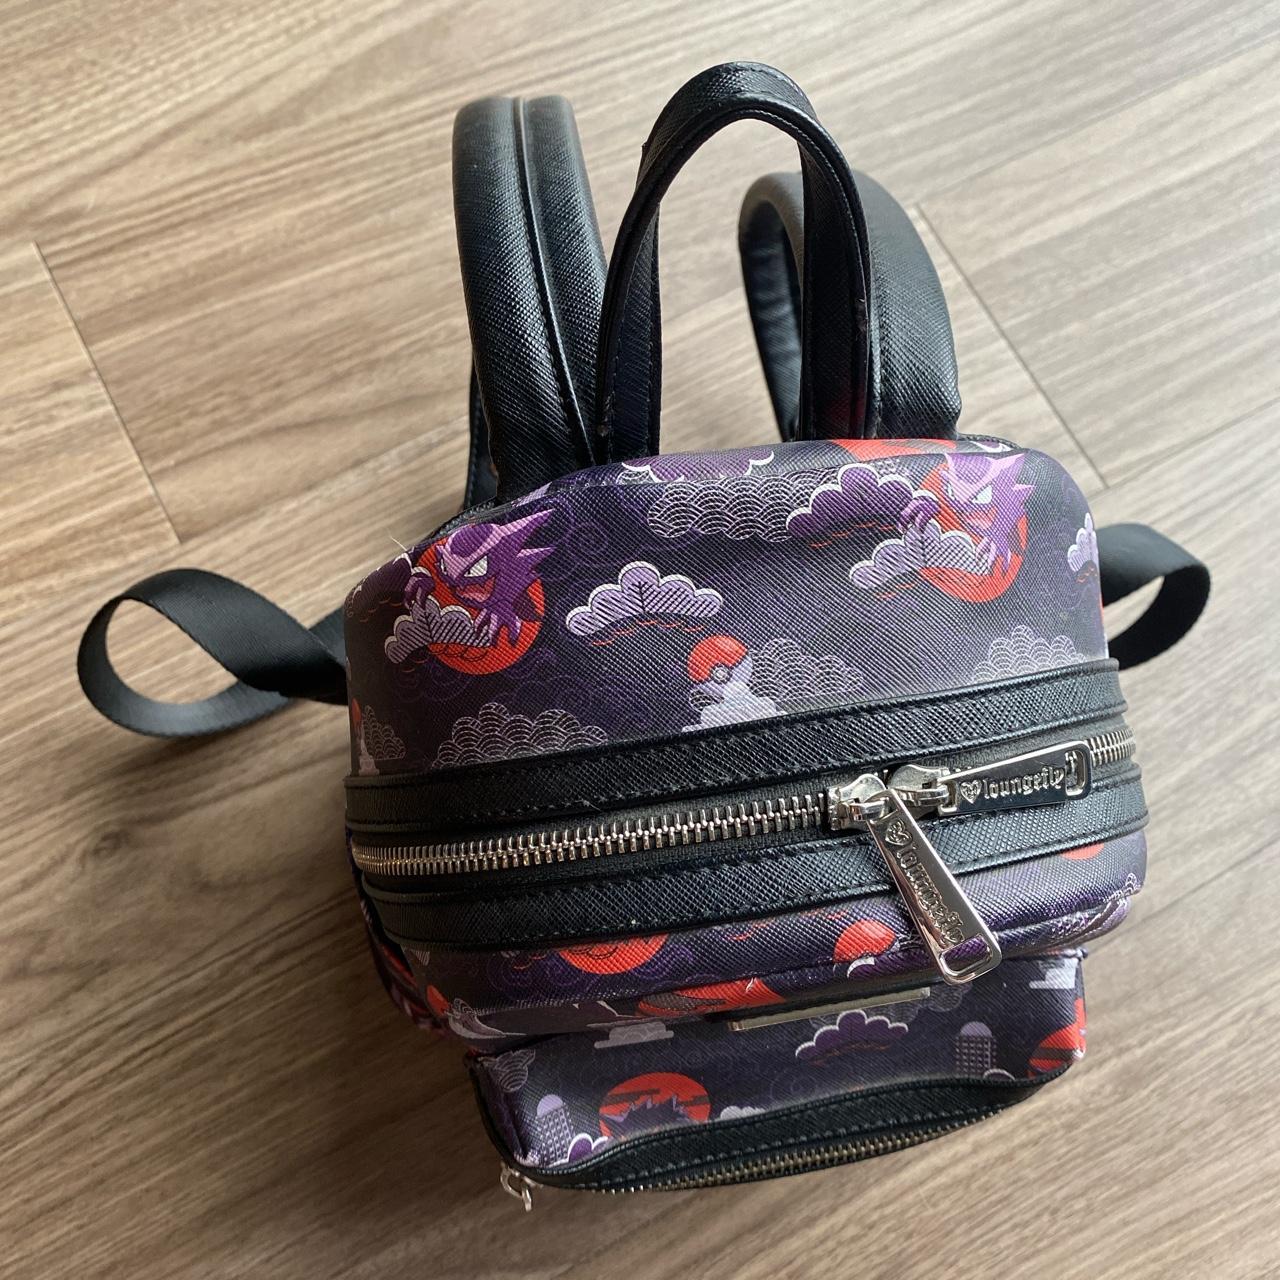 Pokemon Mini Backpack Ghost-Type AOP Loungefly